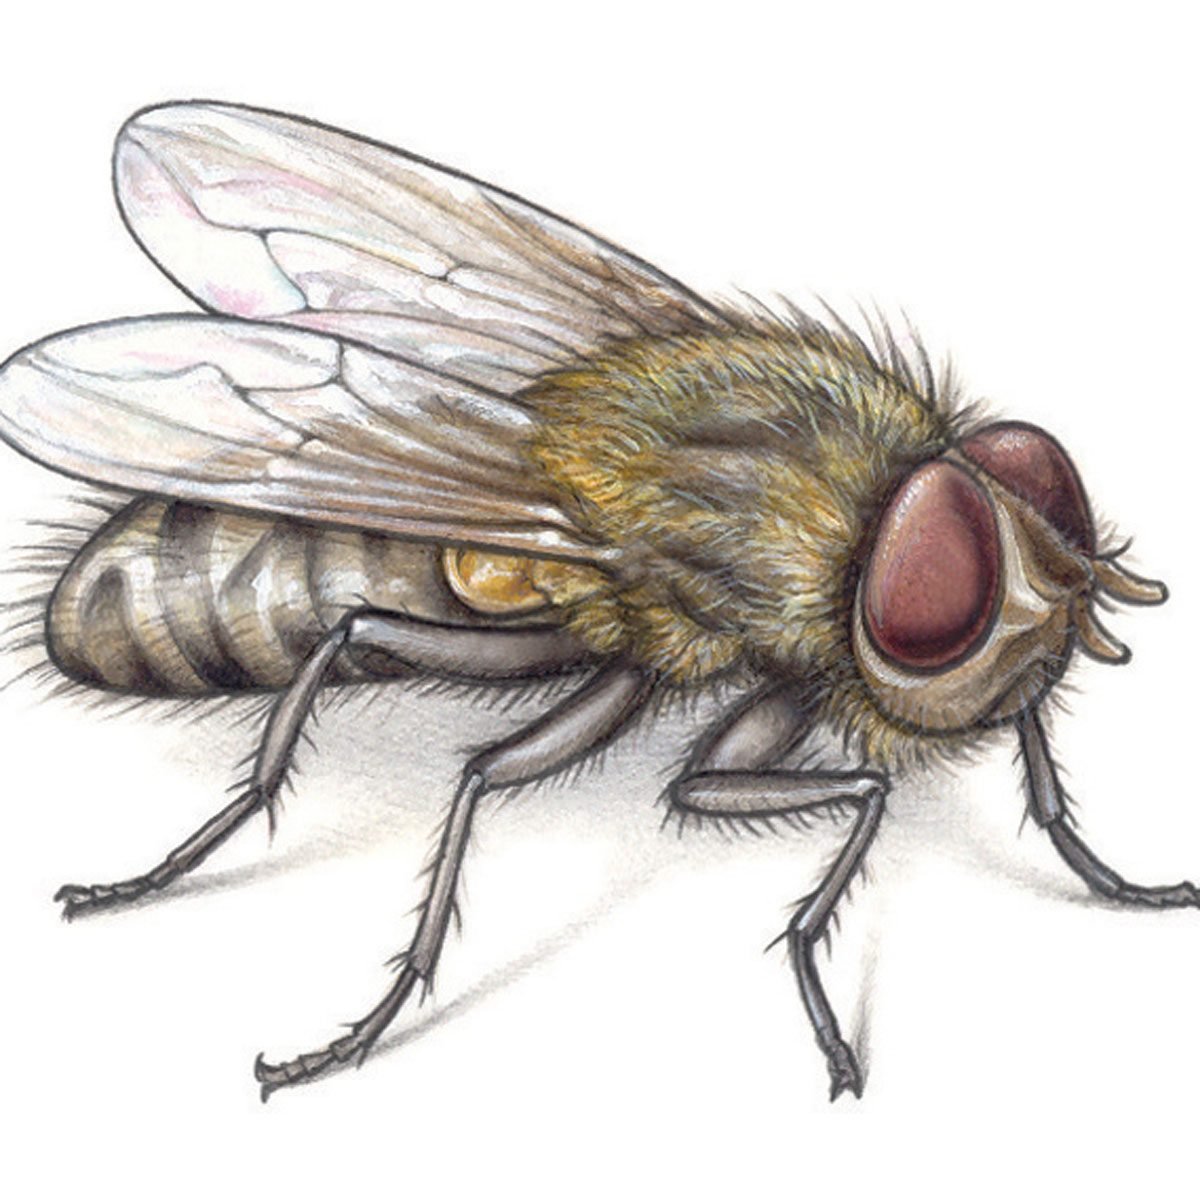 How to kill those pesky fruit flies / gnats flying around your home :  r/lifehacks